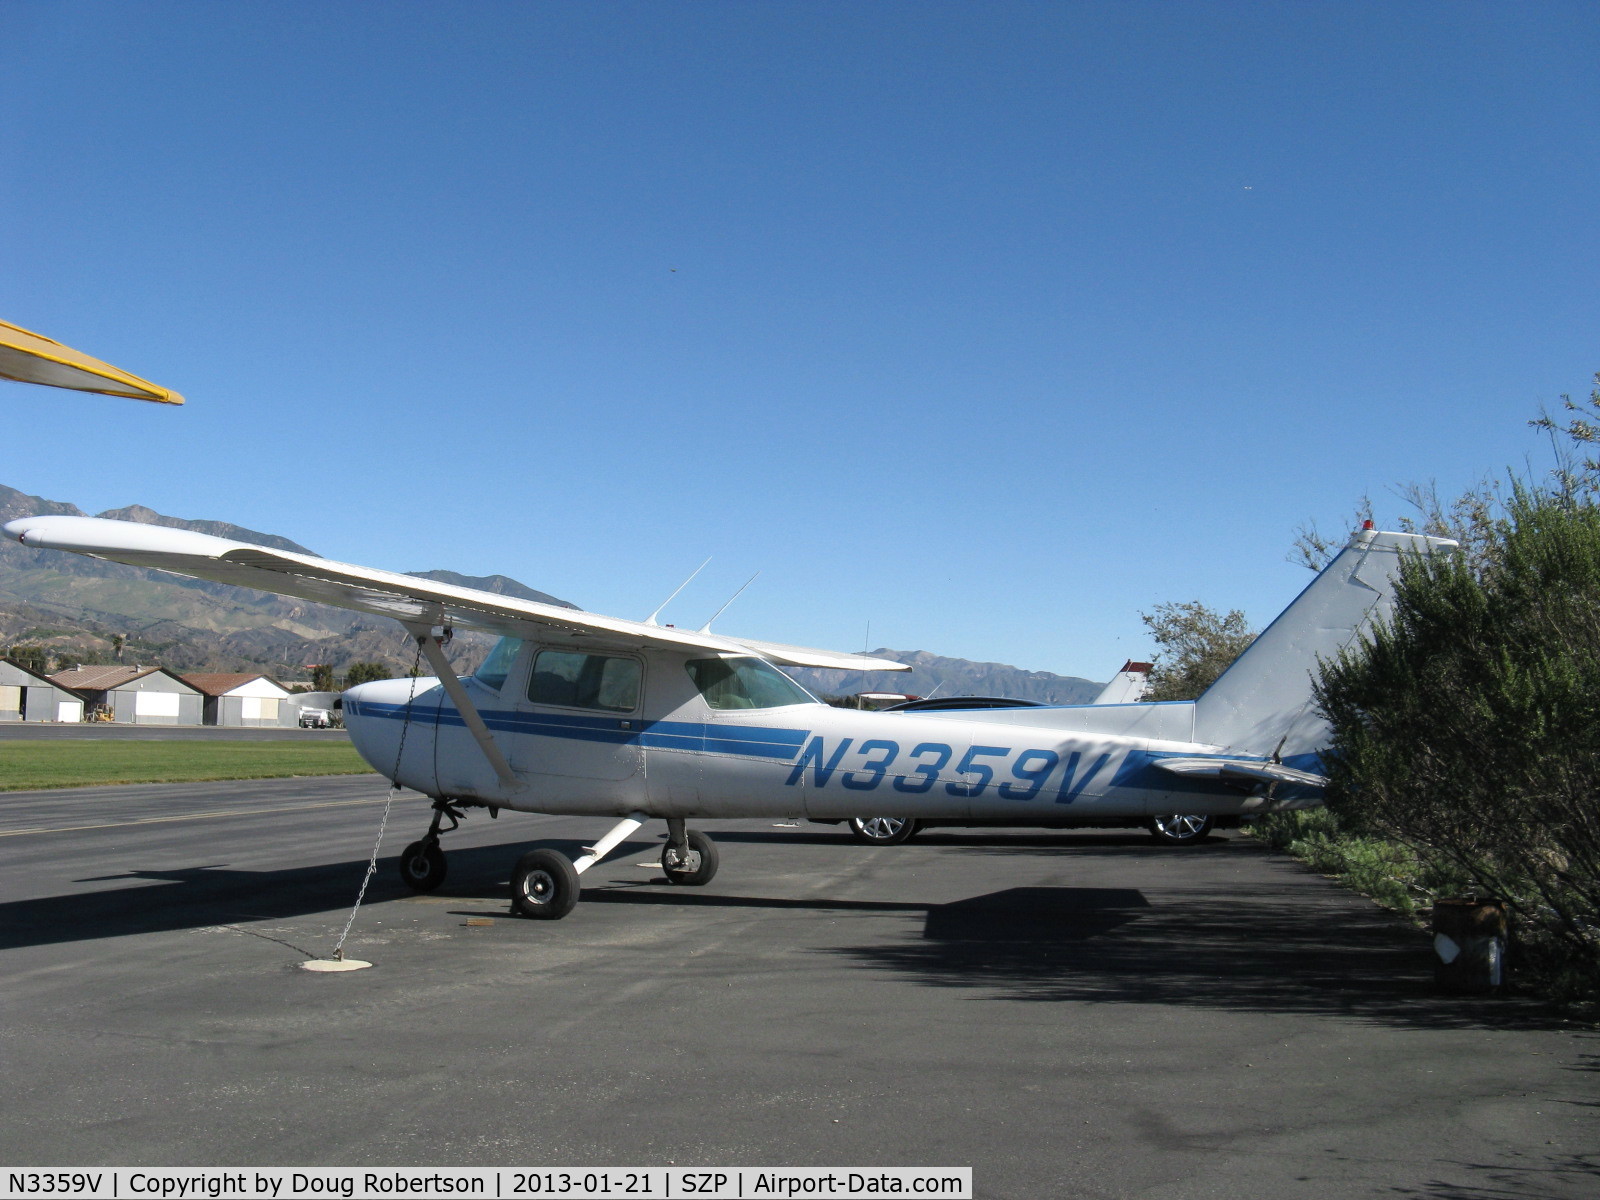 N3359V, 1974 Cessna 150M C/N 15076473, 1974 Cessna 150M, Continental O-200 100 Hp